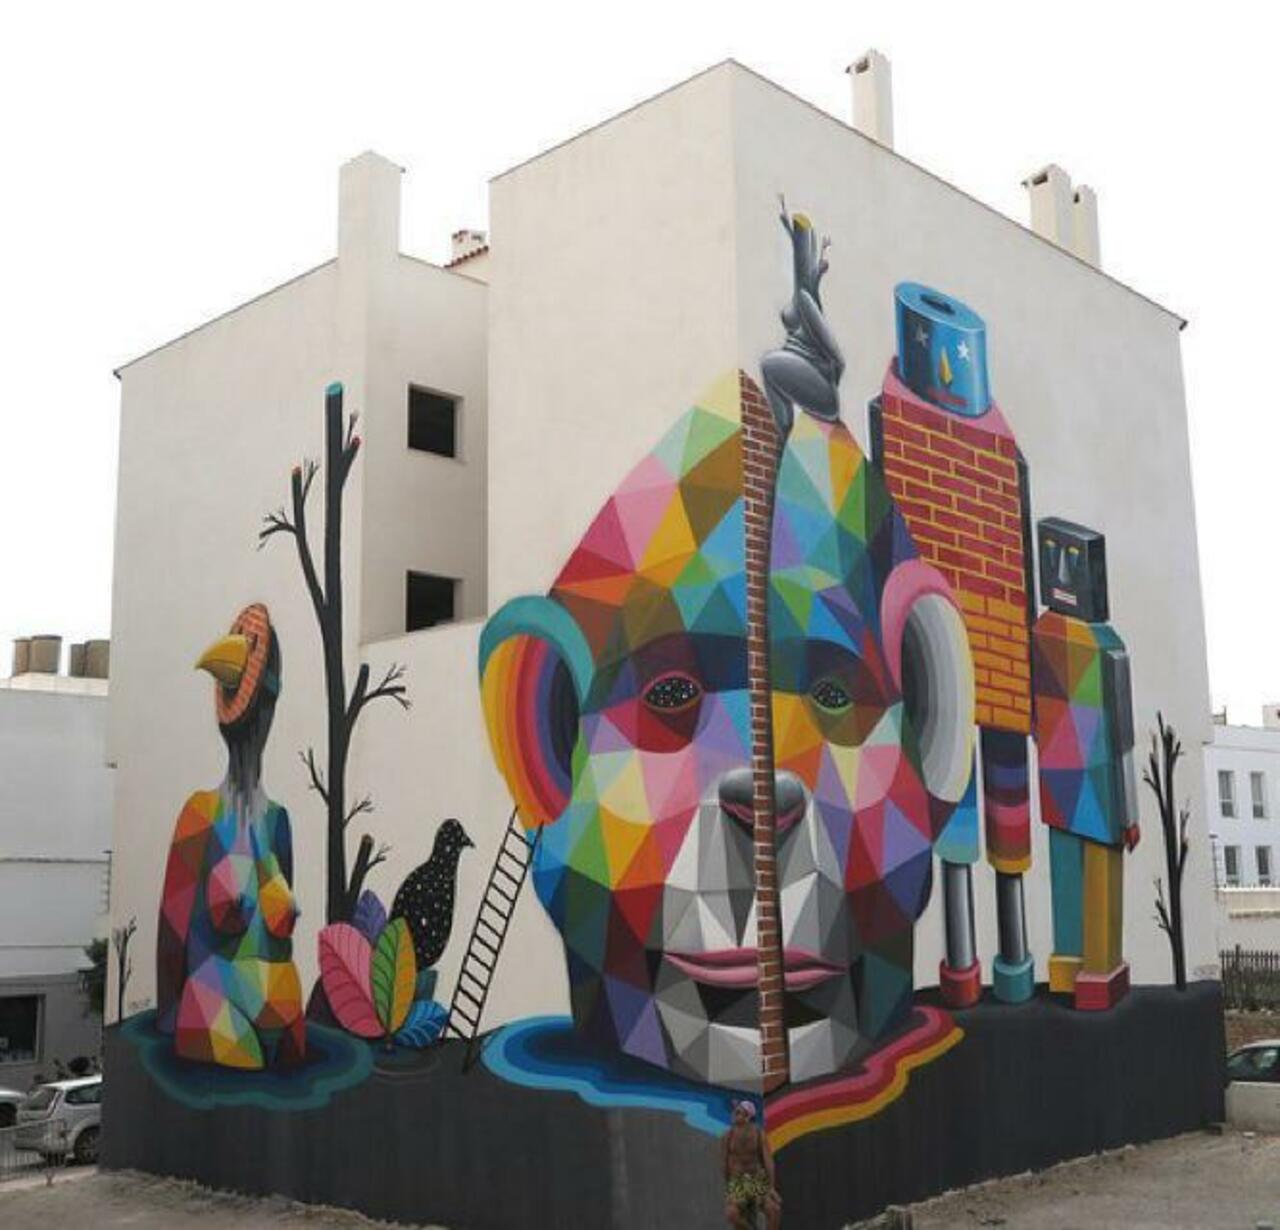 #streetart by @OKUDART @BloopFestival #switch #graffiti #bedifferent #art #arte http://t.co/pdTwbkeWuI